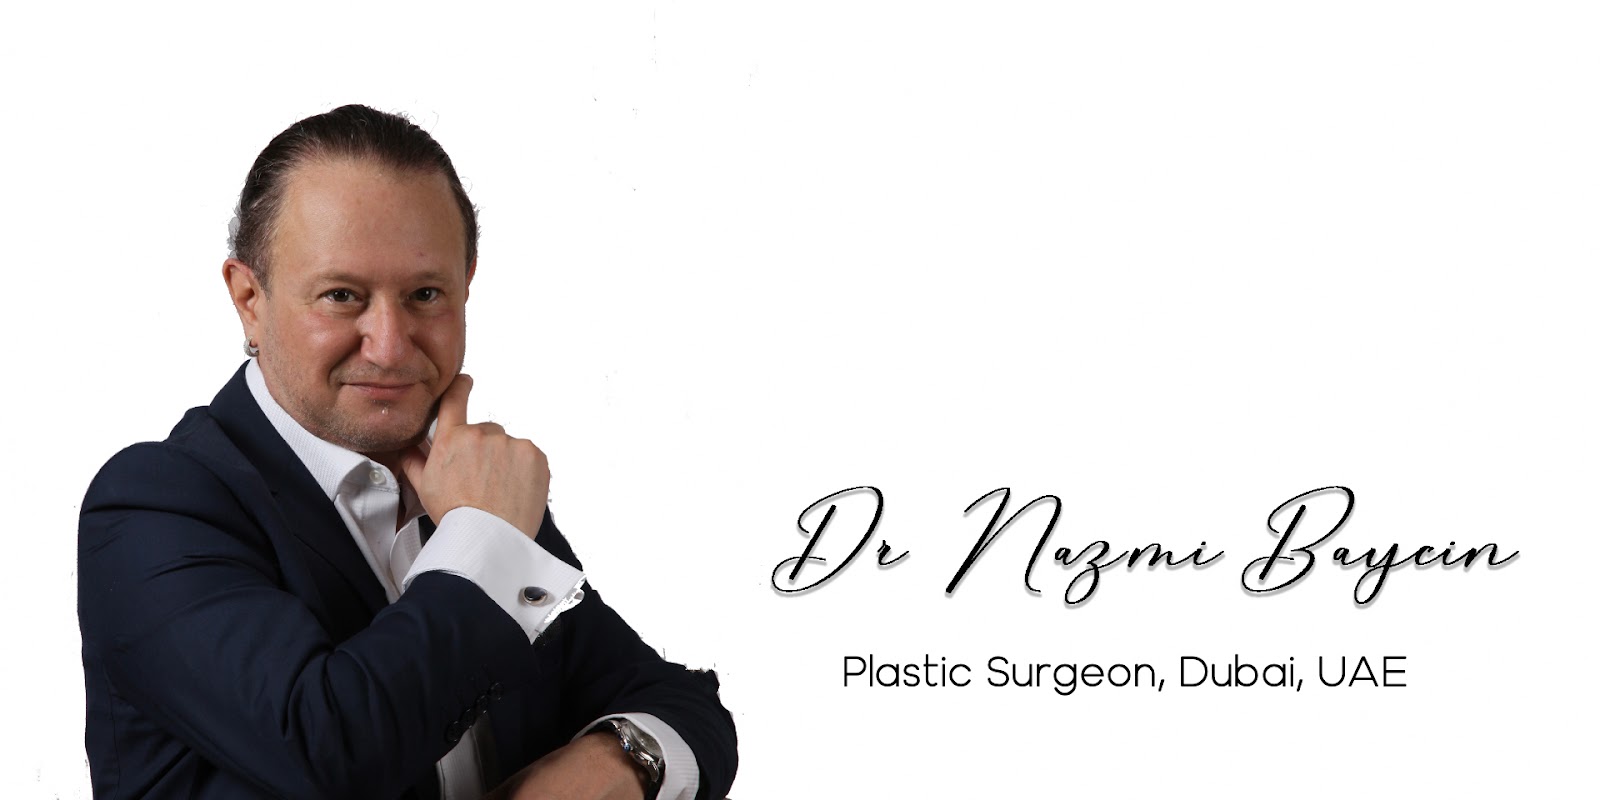 Dr. Nazmi Baycin Plastic Surgery